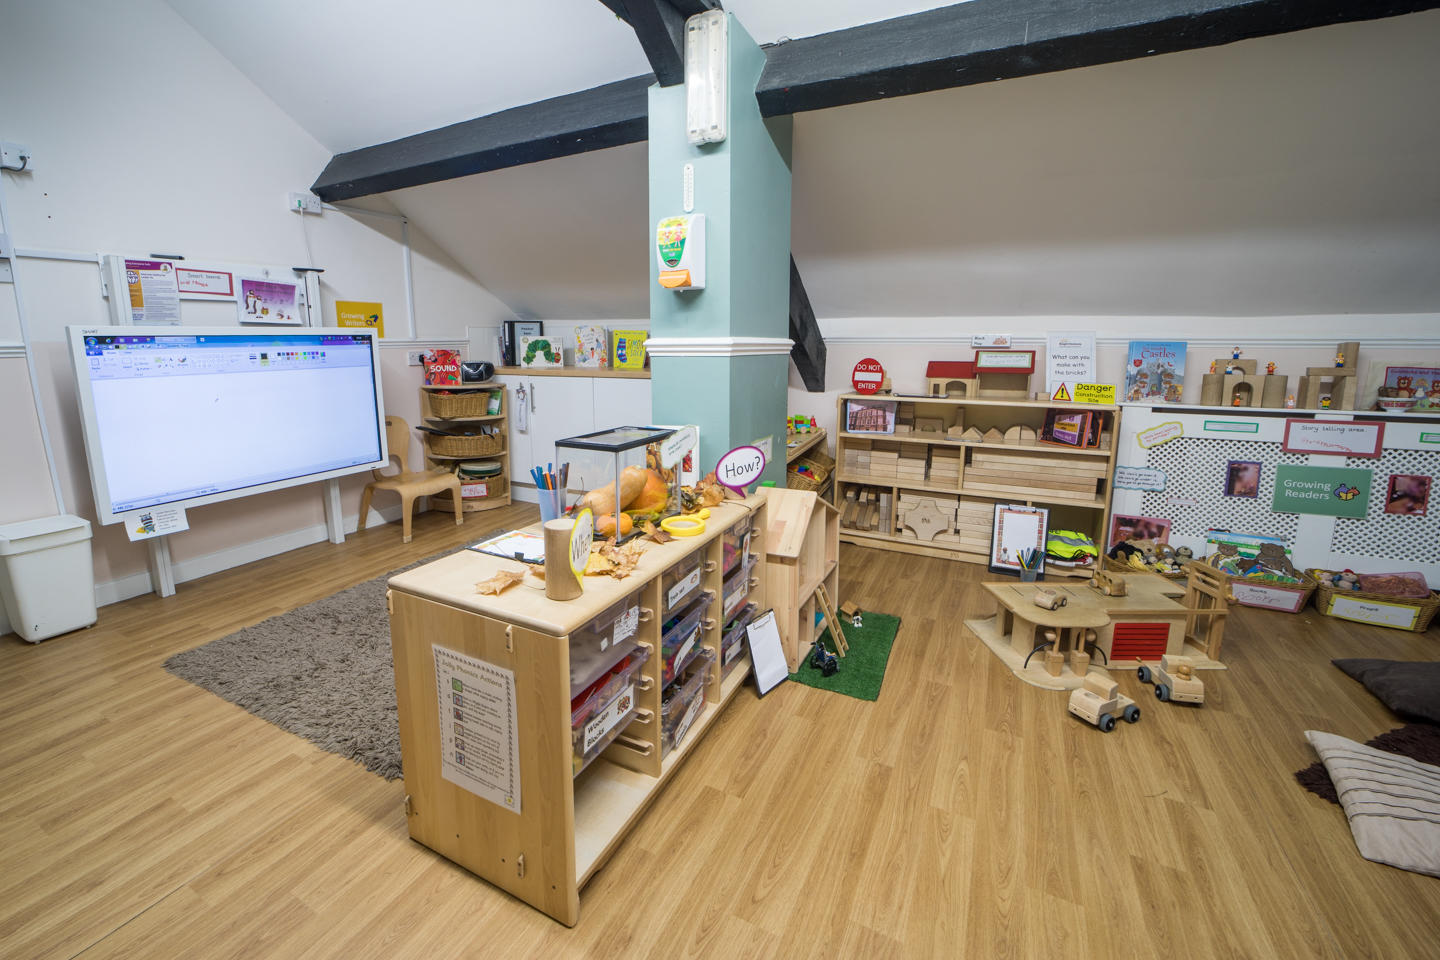 Bright Horizons Prestbury Day Nursery and Preschool Macclesfield 03334 553357